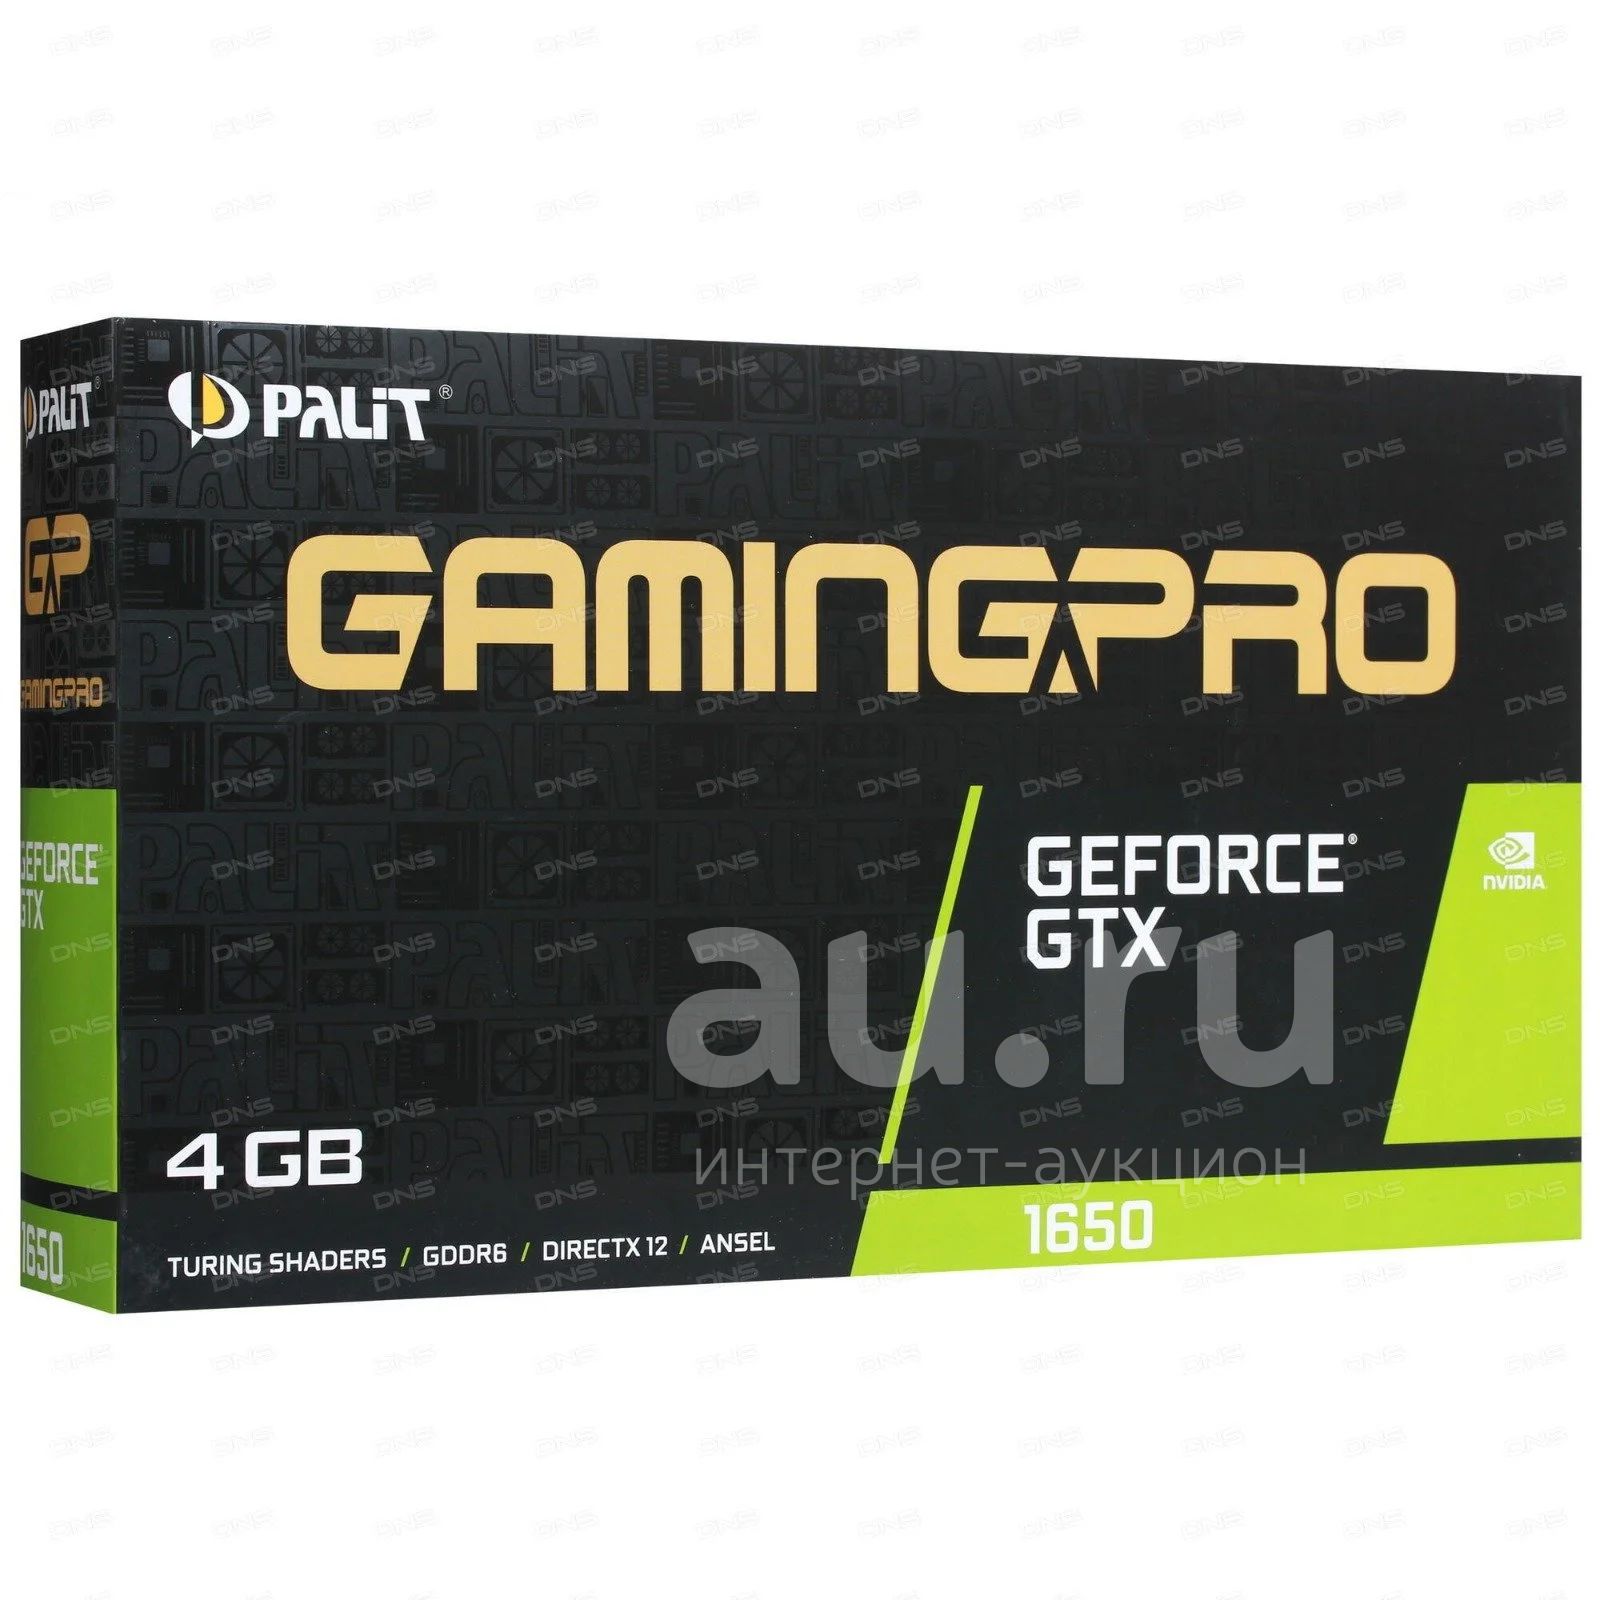 Palit 1650 gaming pro. Palit GEFORCE GTX 1650 GP 4gb, ne6165001bg1-1175a. Ne6165001bg1-1175a.